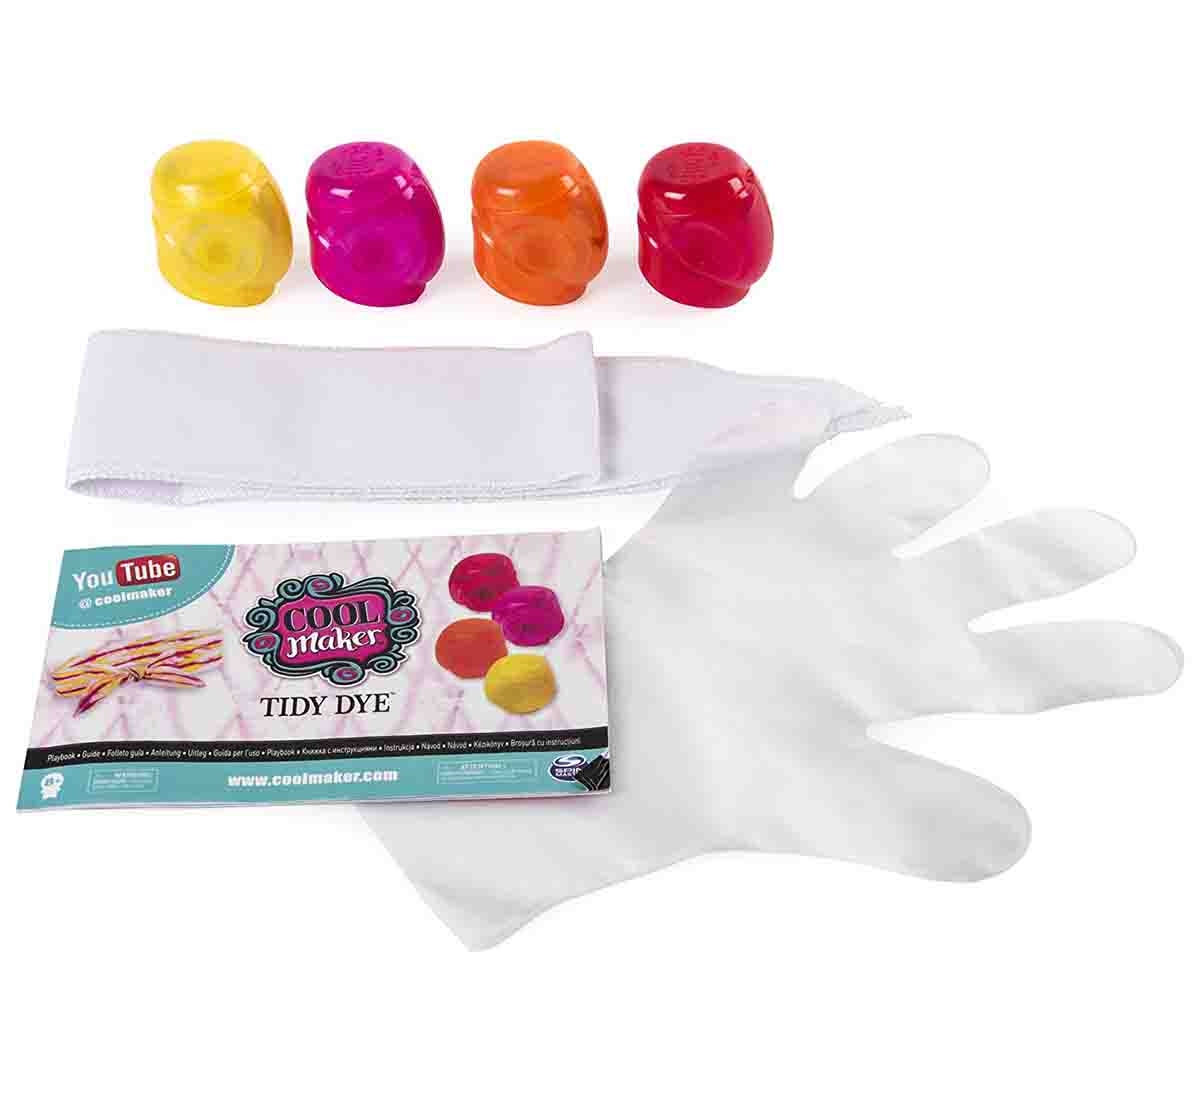 Tidy Dye | Tidy Dye Cool Maker Tidy Dye Sunny String Kit For Fabric Dying 1